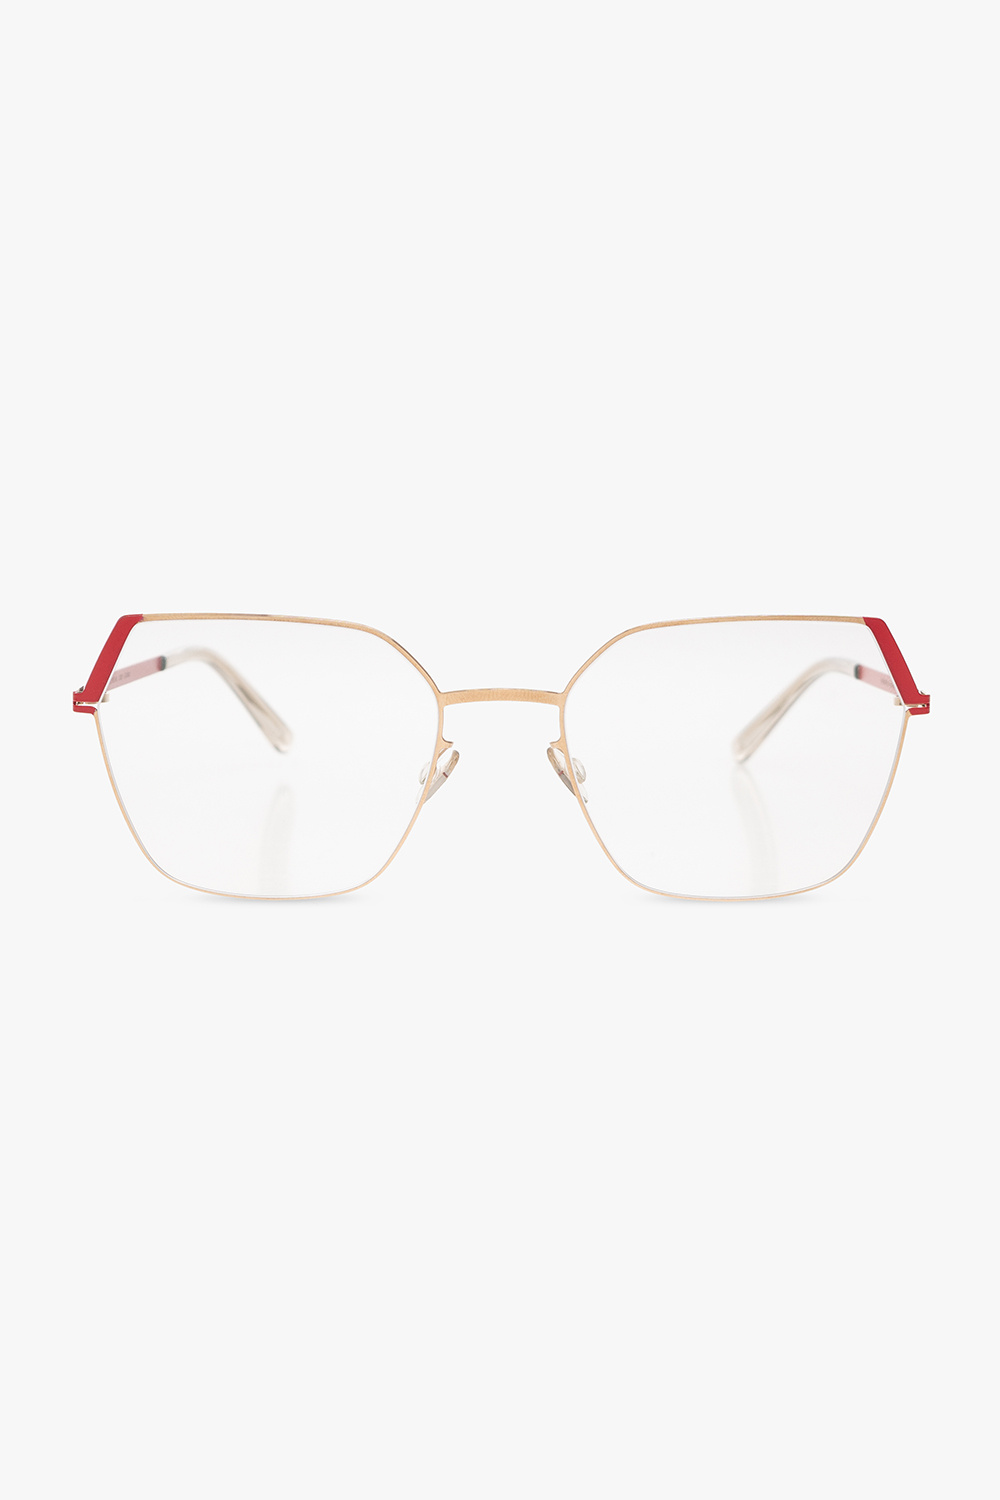 Mykita ‘Stine’ optical glasses